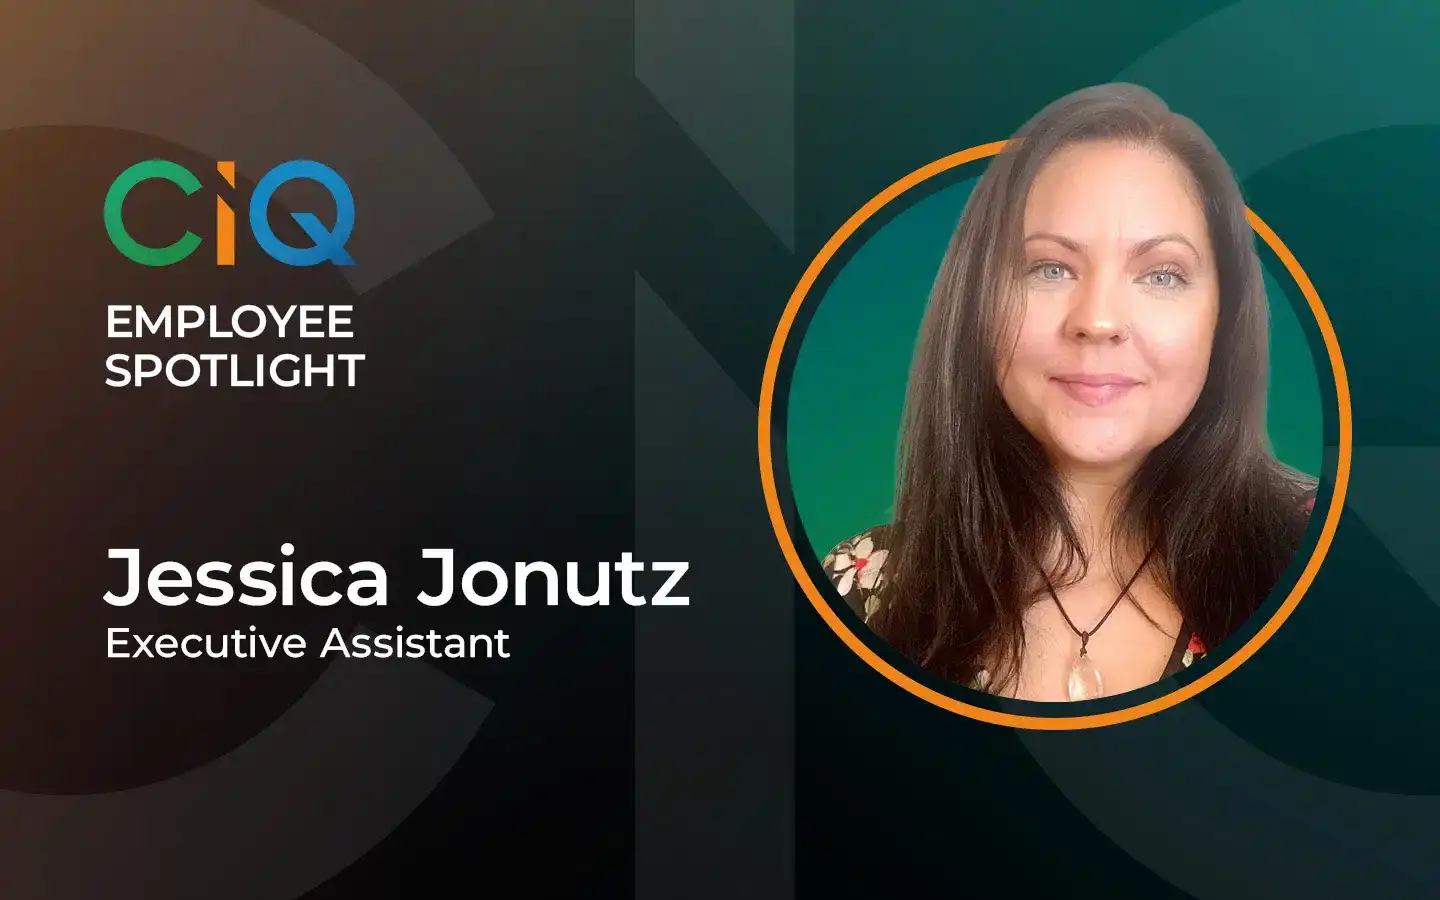 CIQ Employee Spotlight: Jessica Jonutz